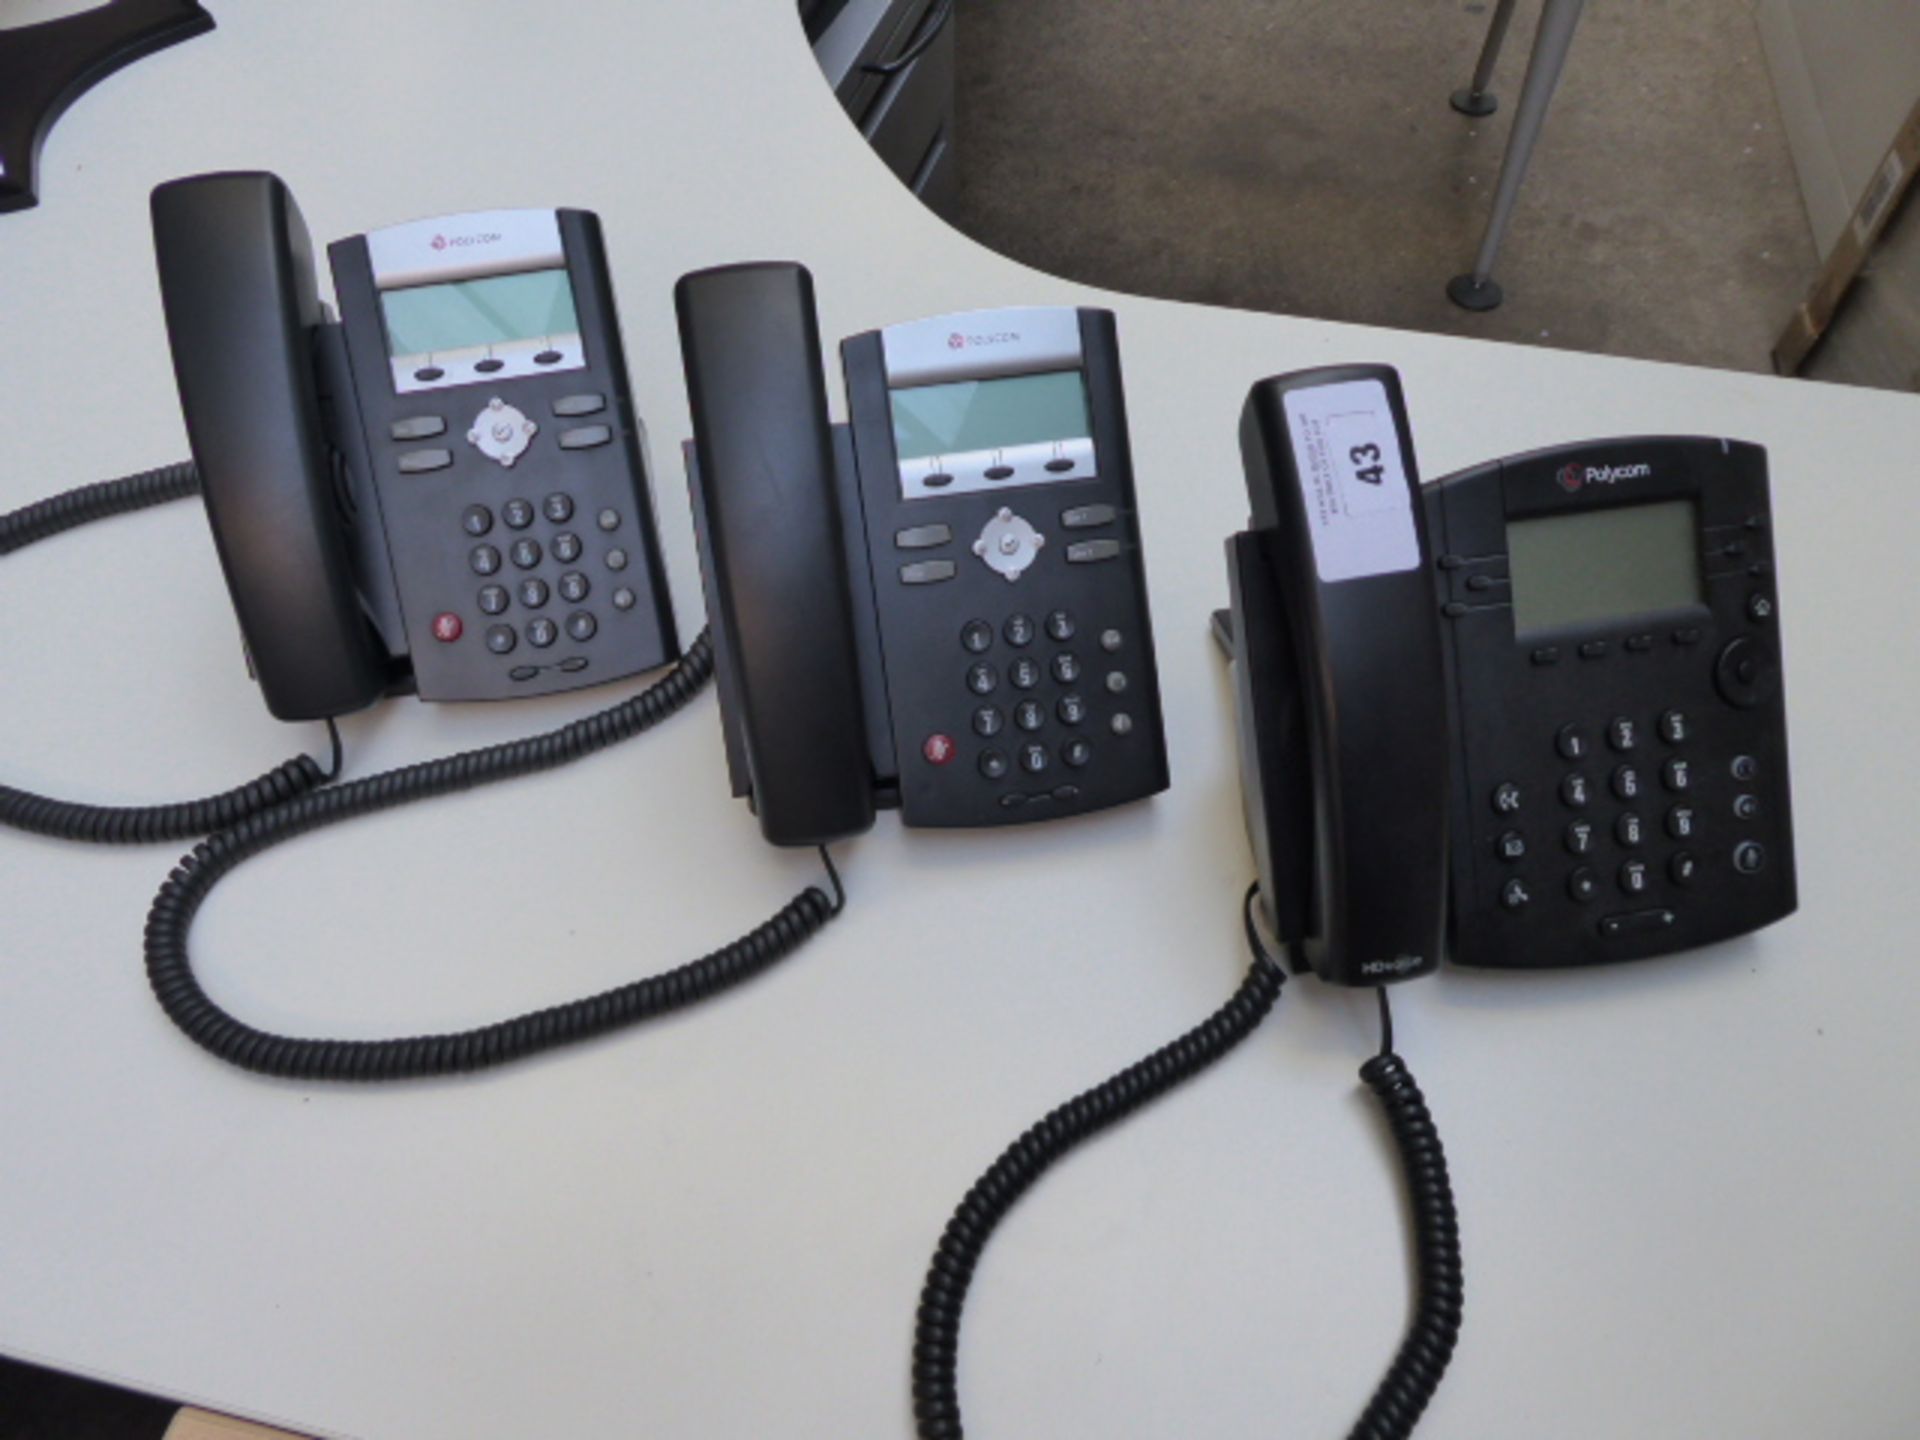 Three polycom telephone handsets